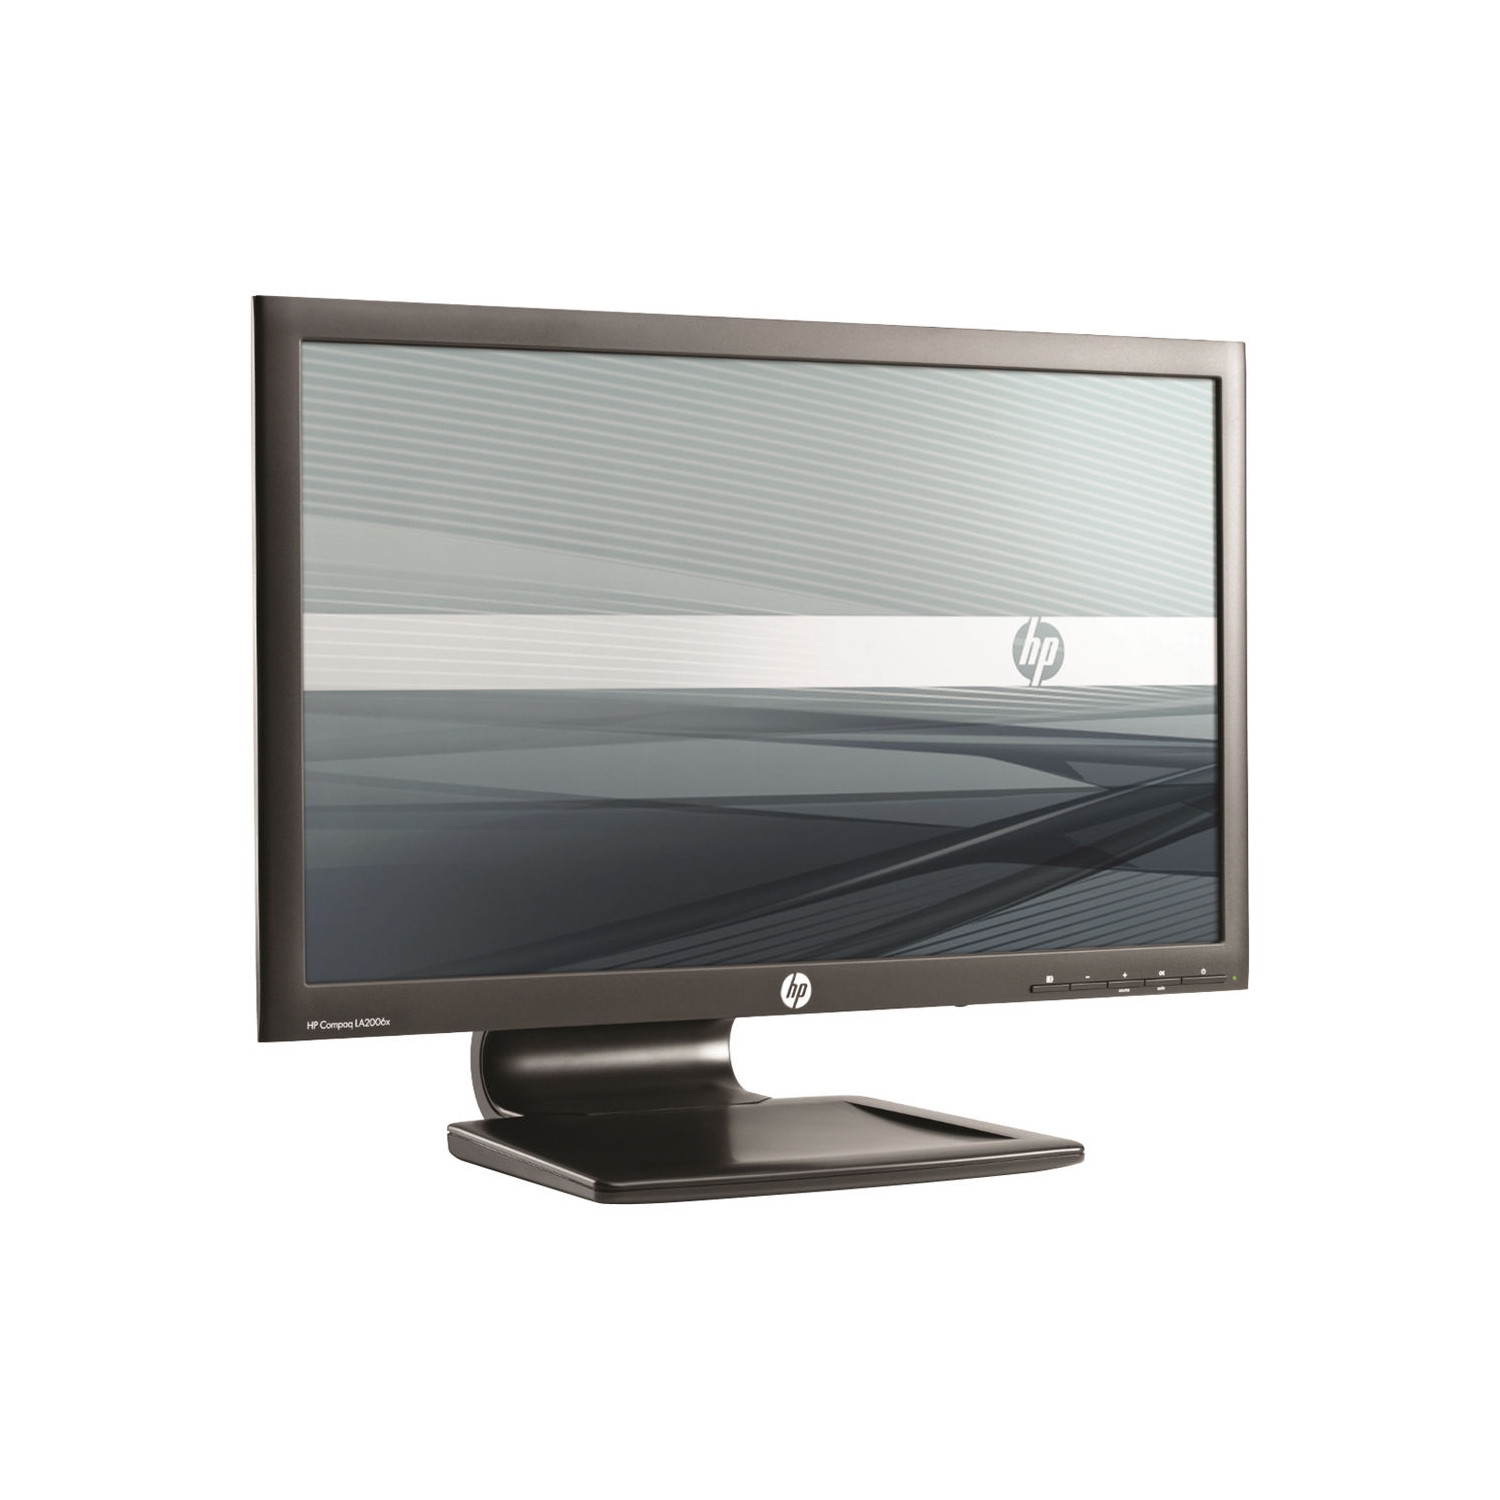 Refurbished (Good) - HP LA2006x 20" LED Backlit LCD Monitor